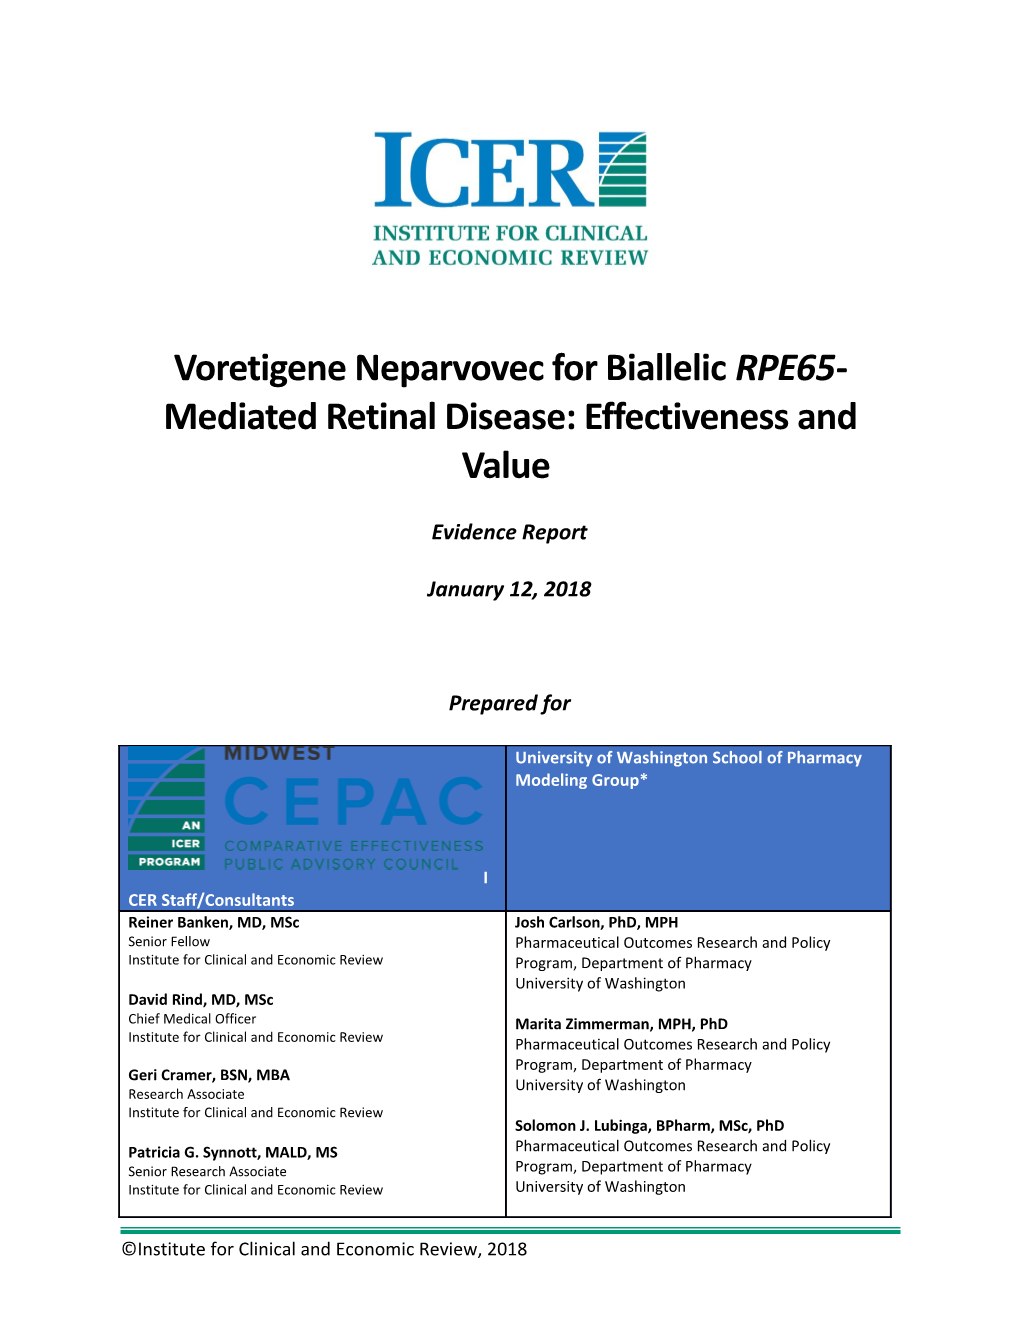 Voretigene Neparvovec for Biallelic RPE65-Mediated Retinal Disease: Effectiveness and Value